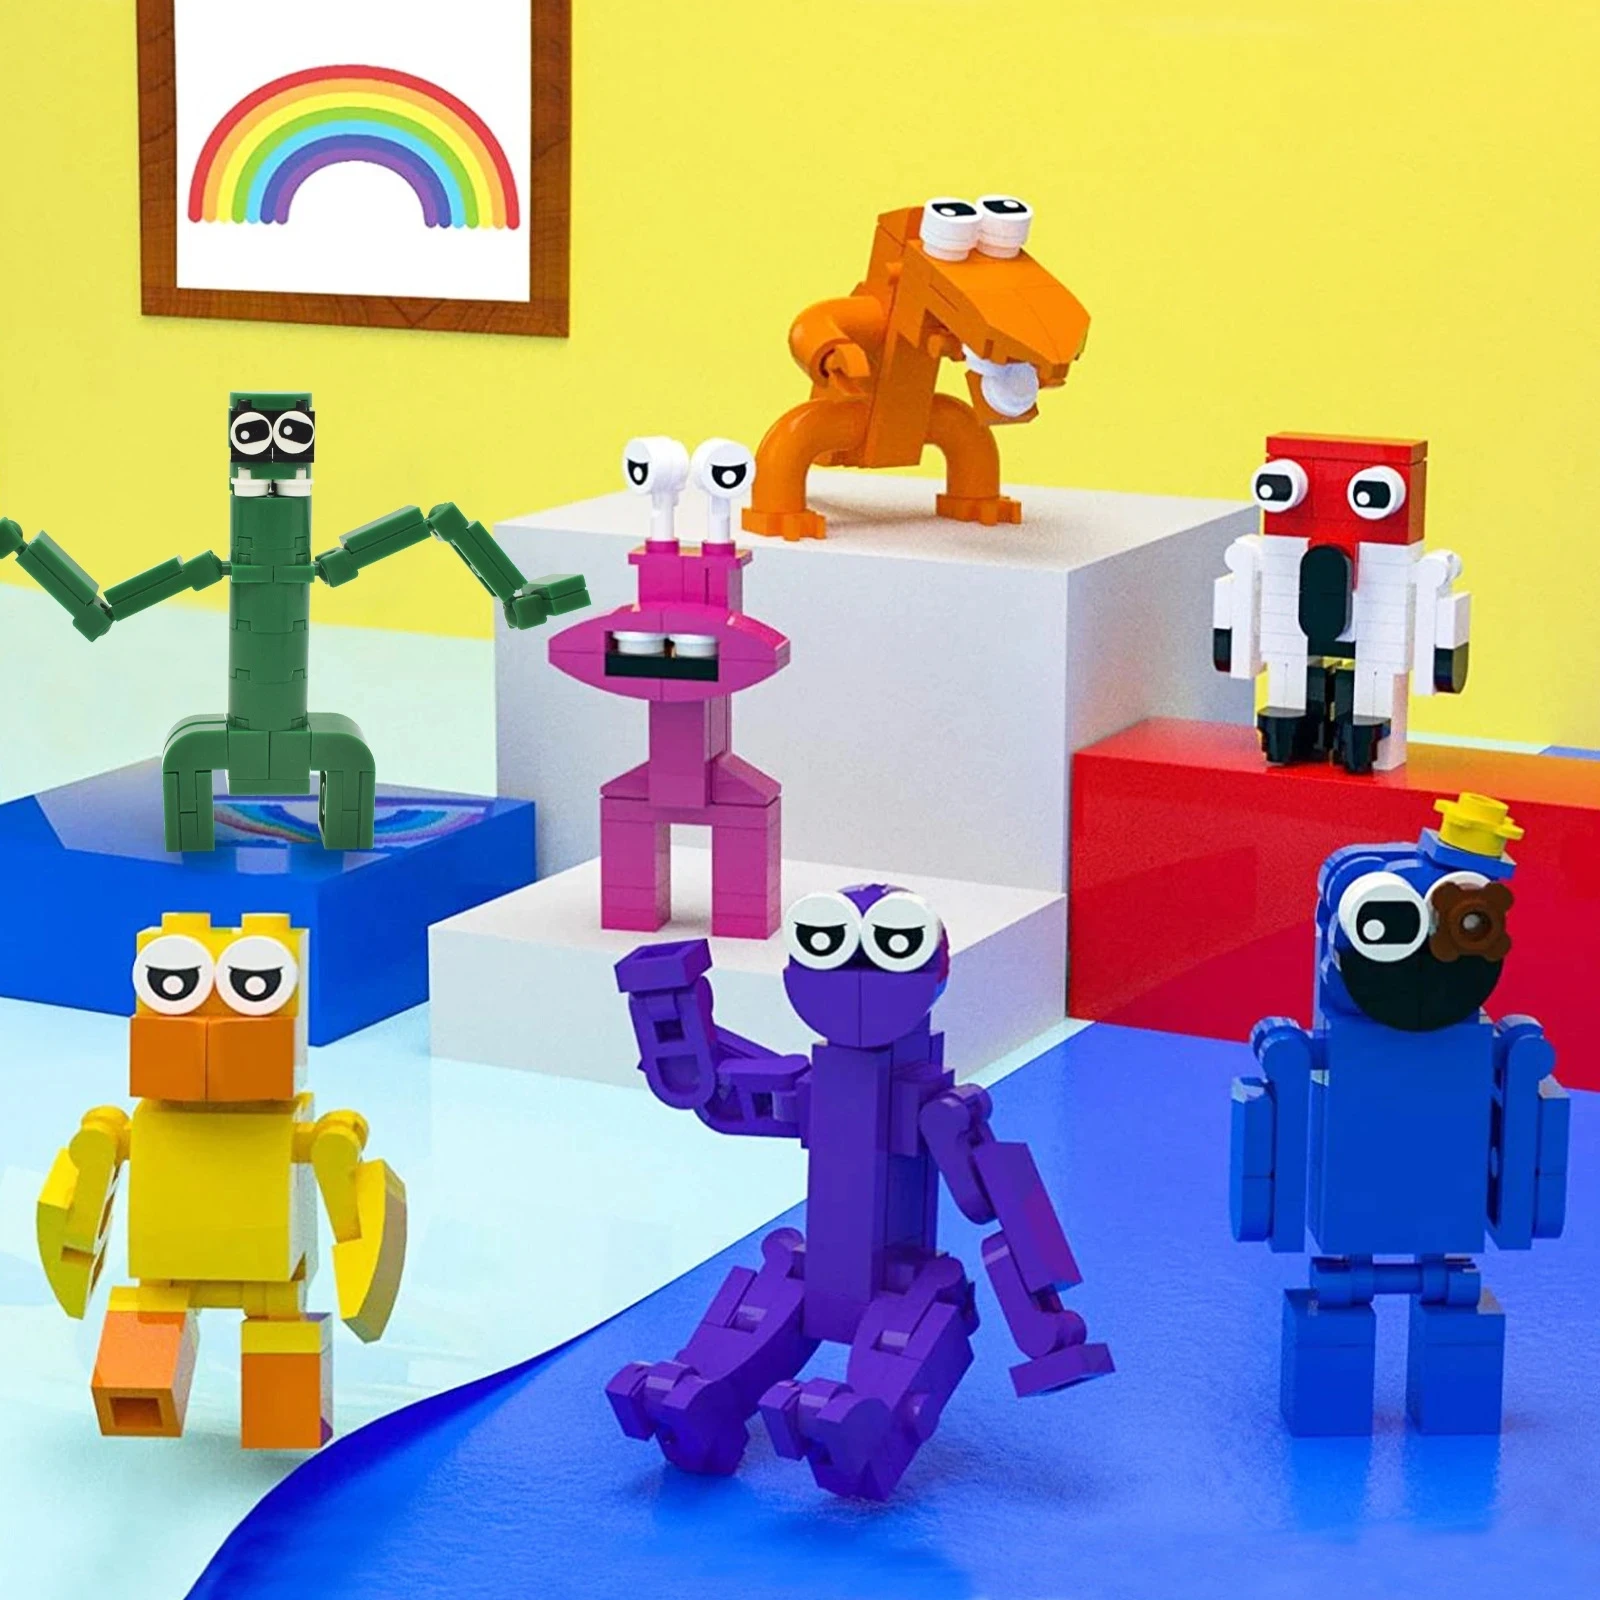 761 Rainbow Friends 8 in 1 Minifigures Building Blocks Toys